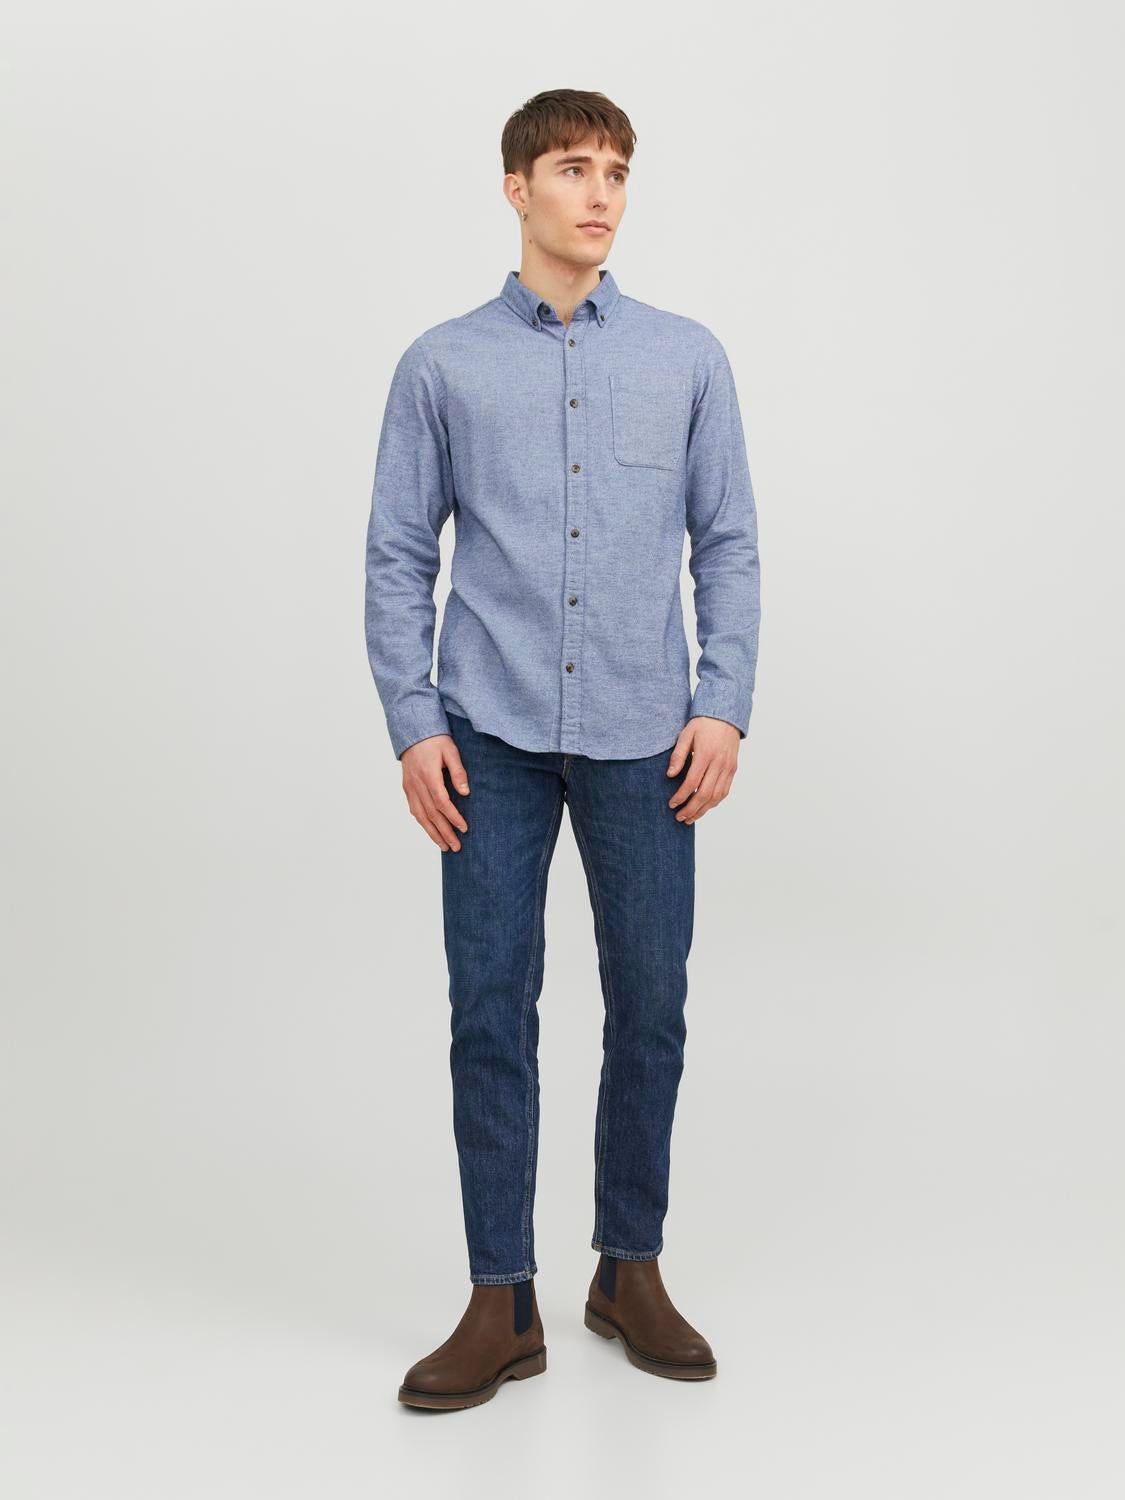 Buy Blue Shirts for Men by YOVISH Online | Ajio.com